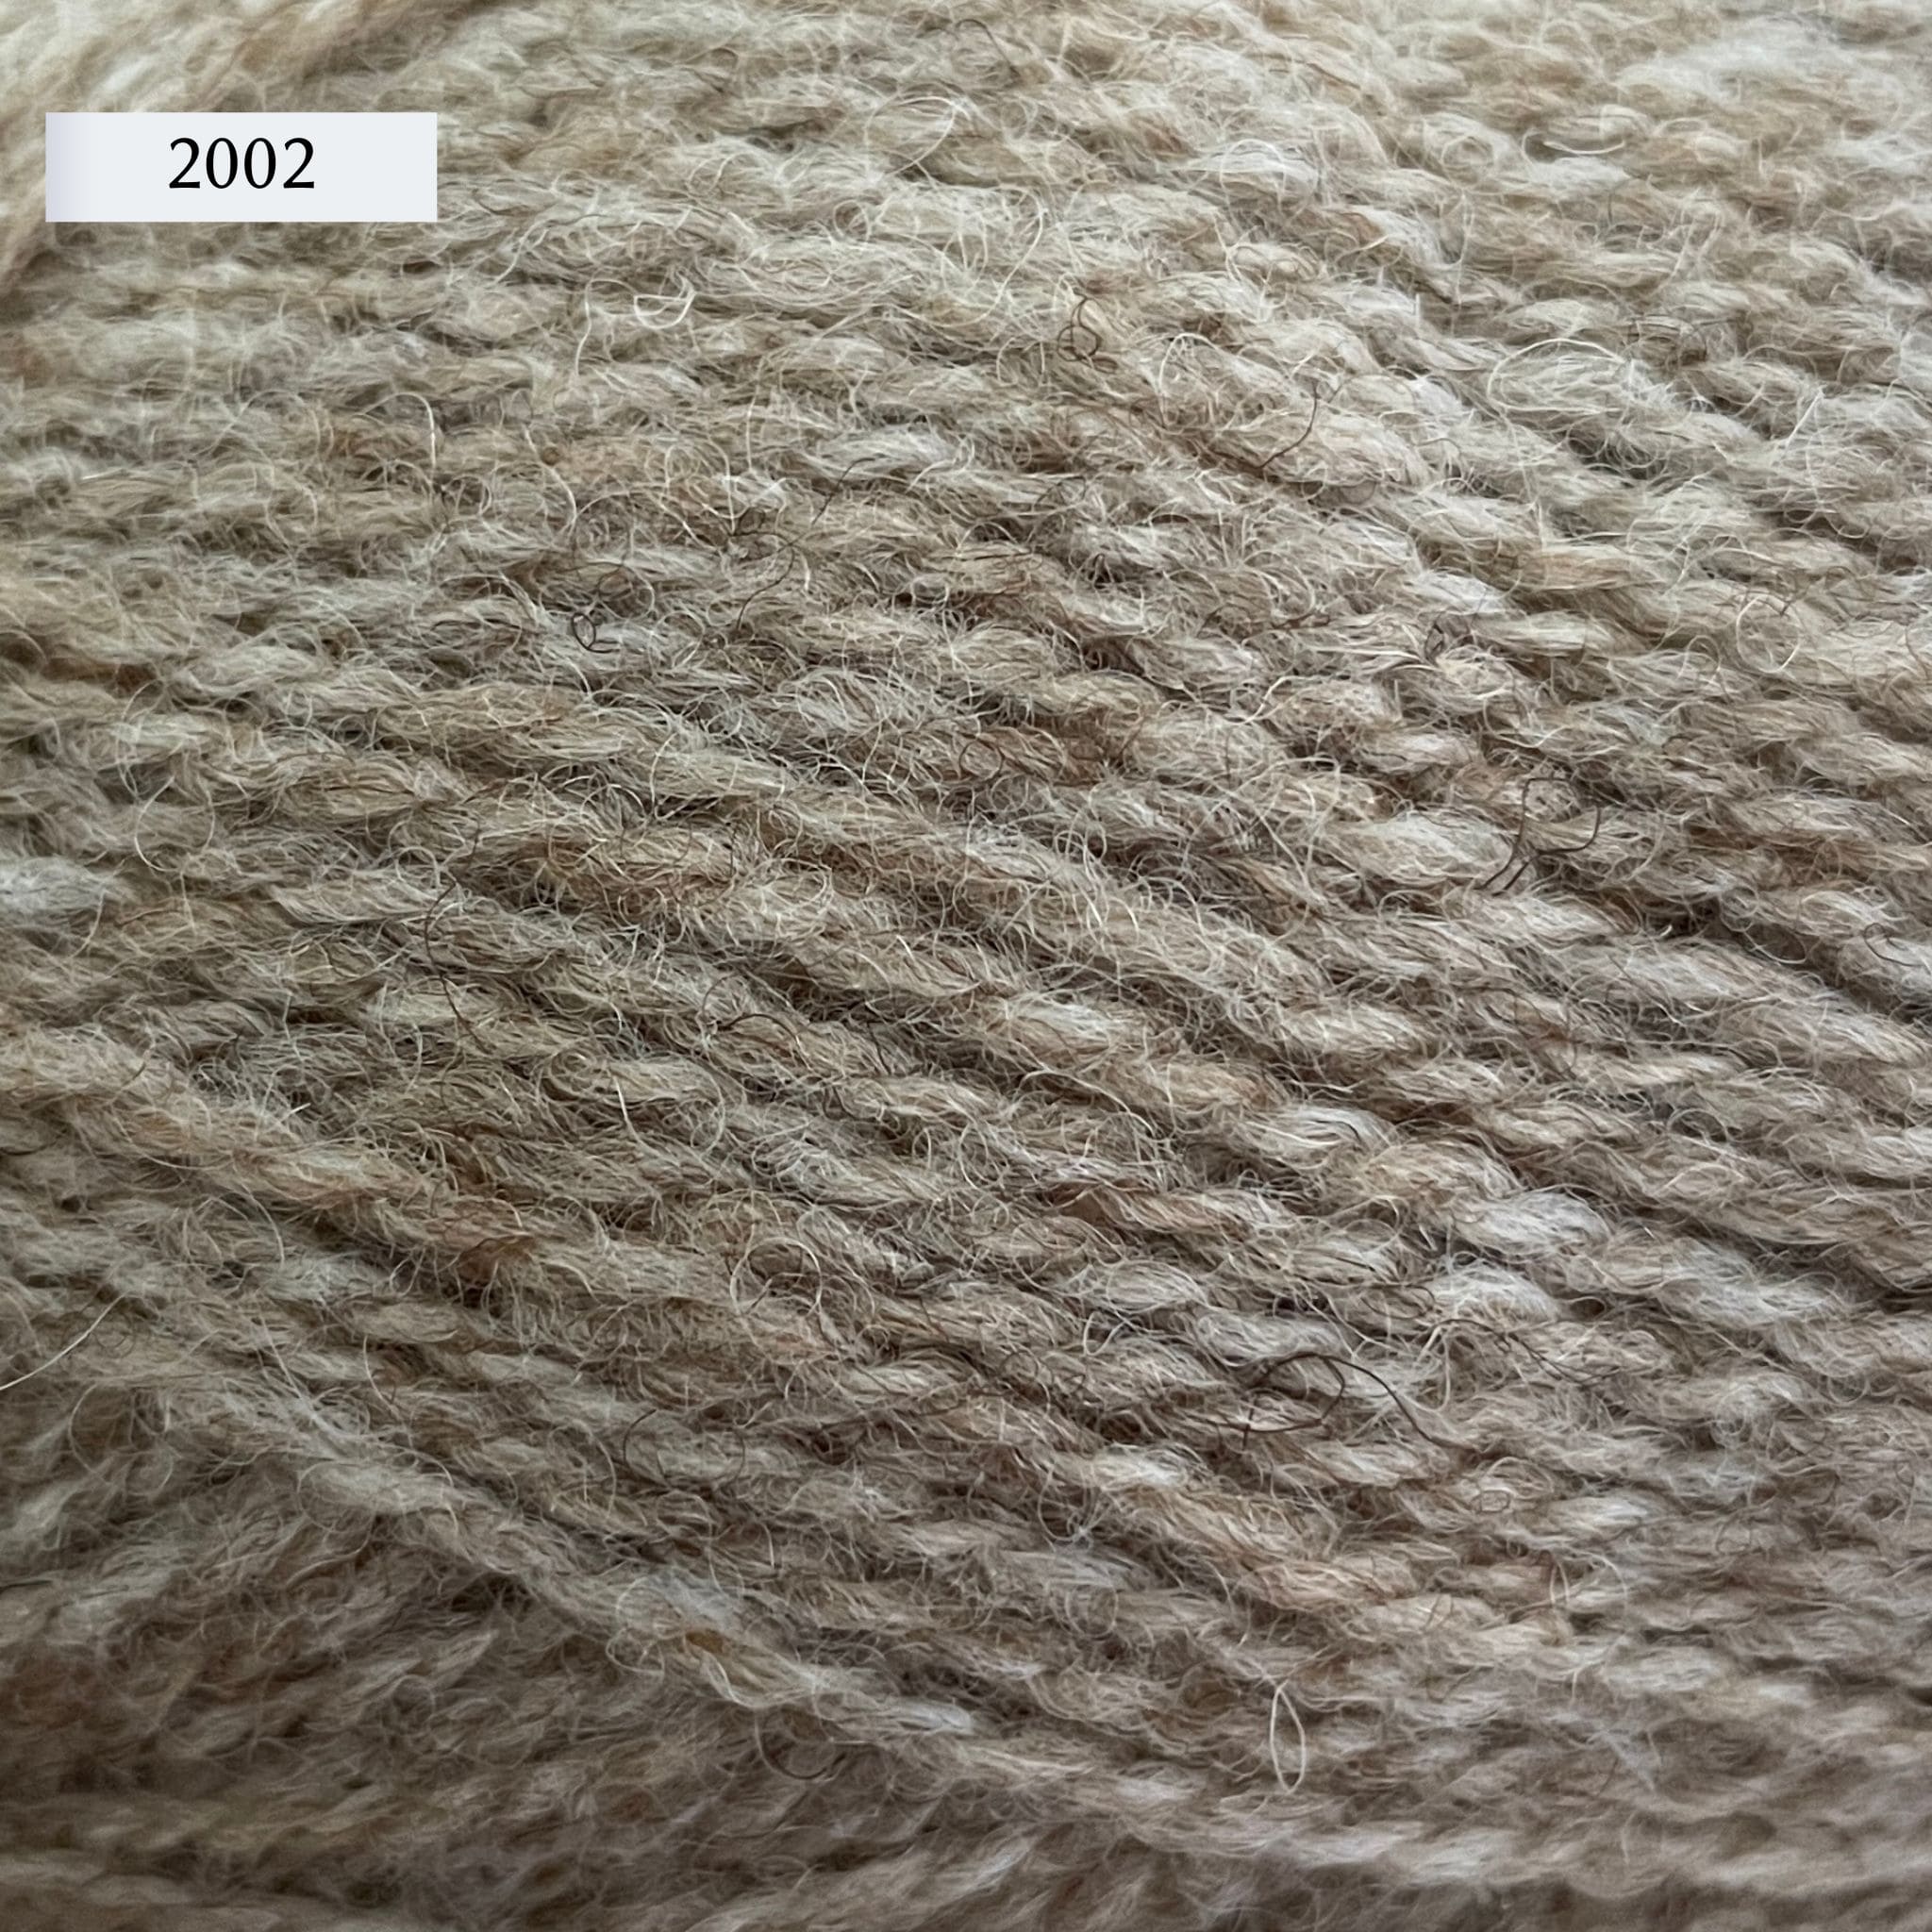 Jamieson & Smith Shetland Supreme Jumper Weight Yarn – The Woolly Thistle